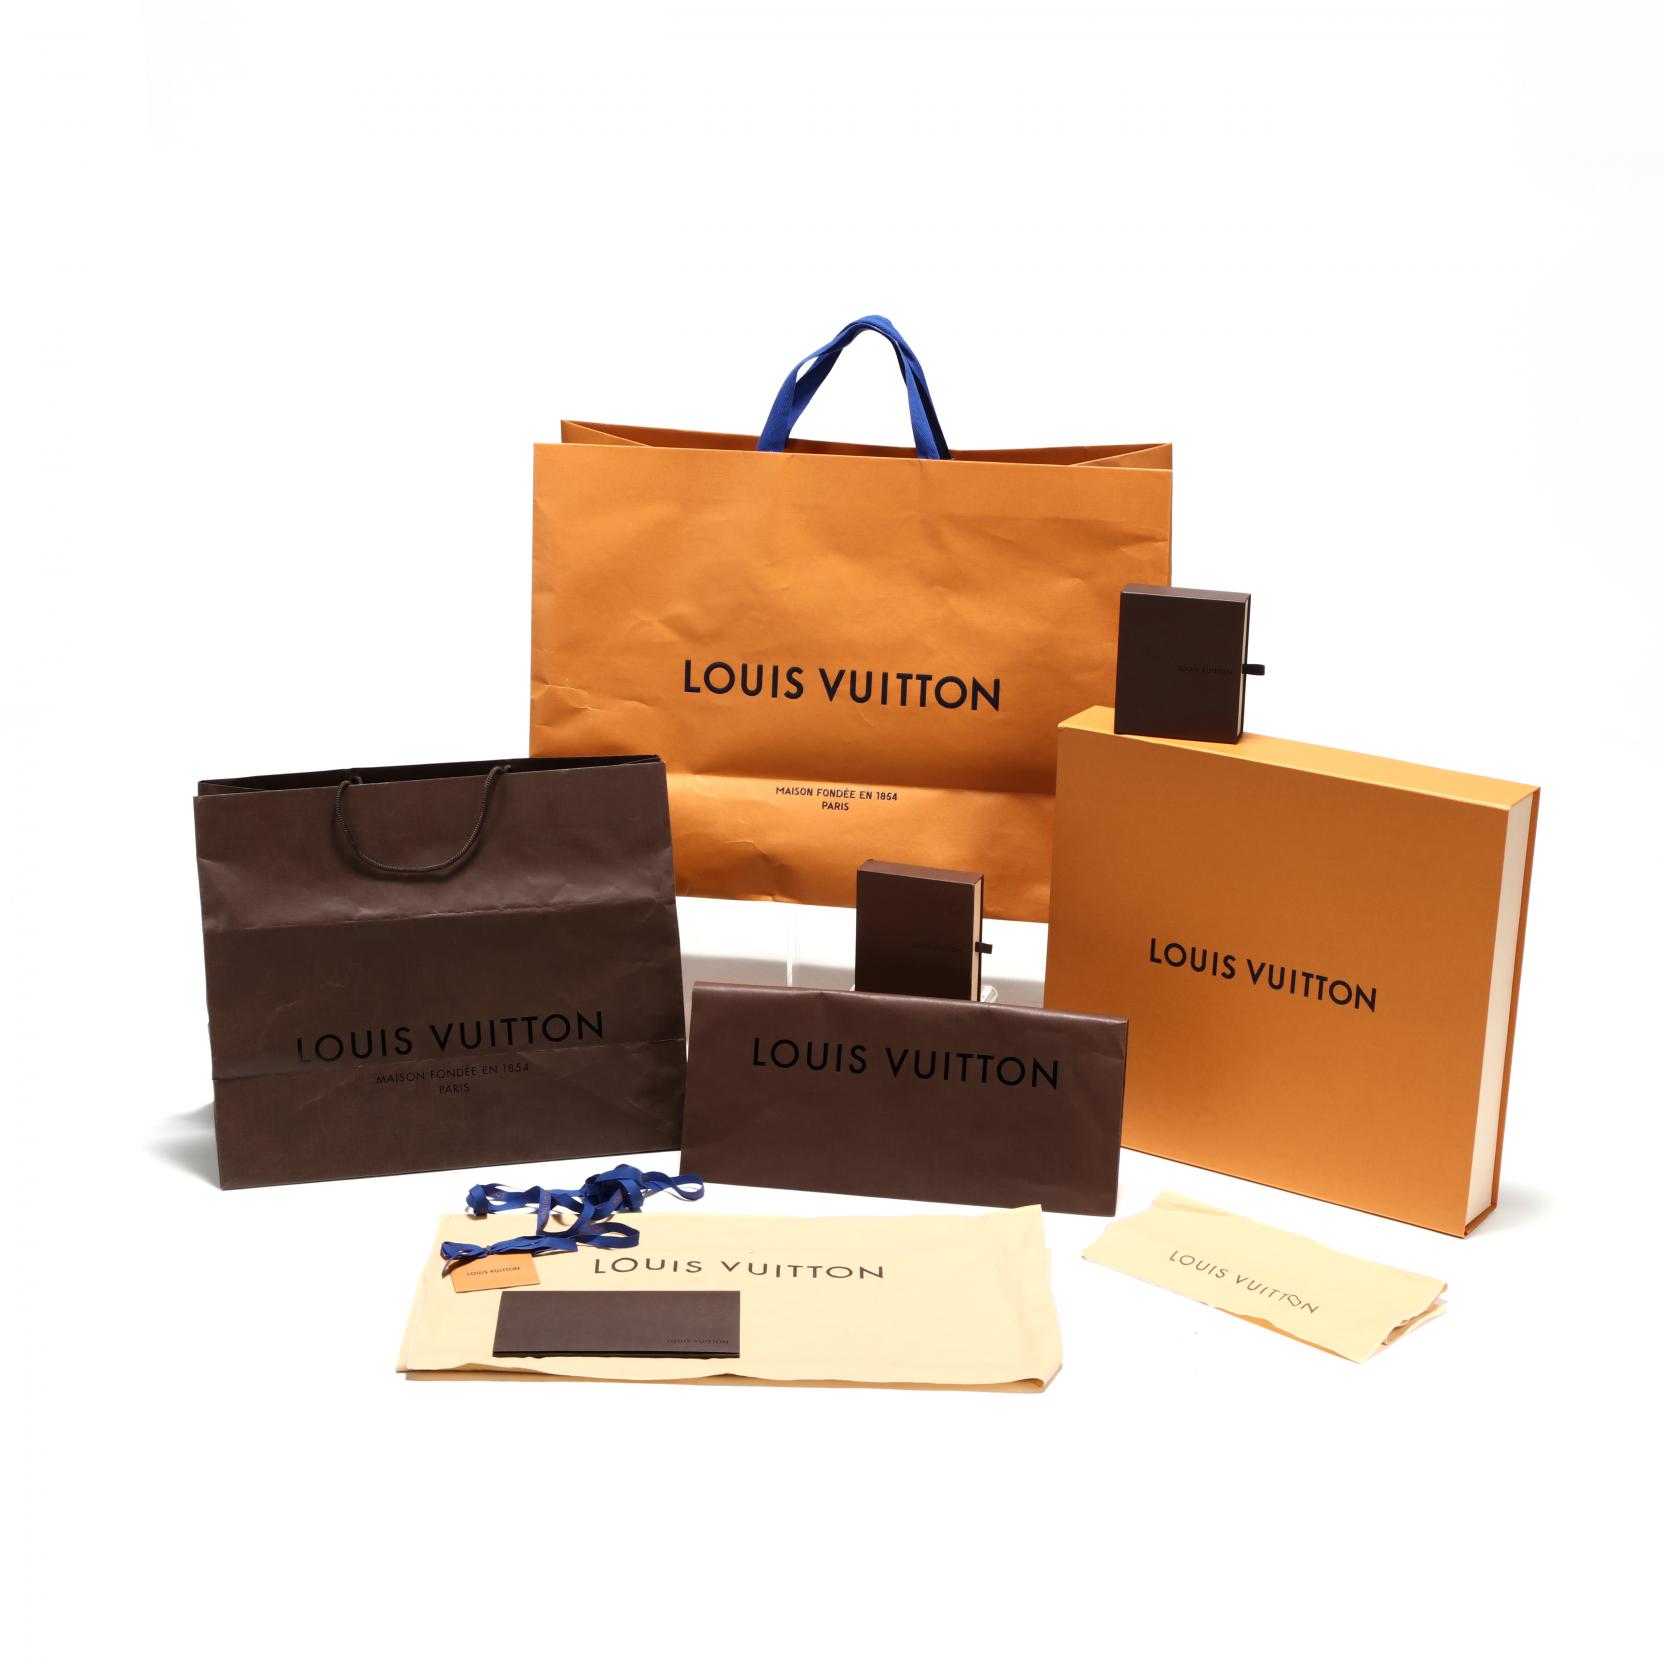 Louis Vuitton, Accessories, Louis Vuitton Shopping Bag